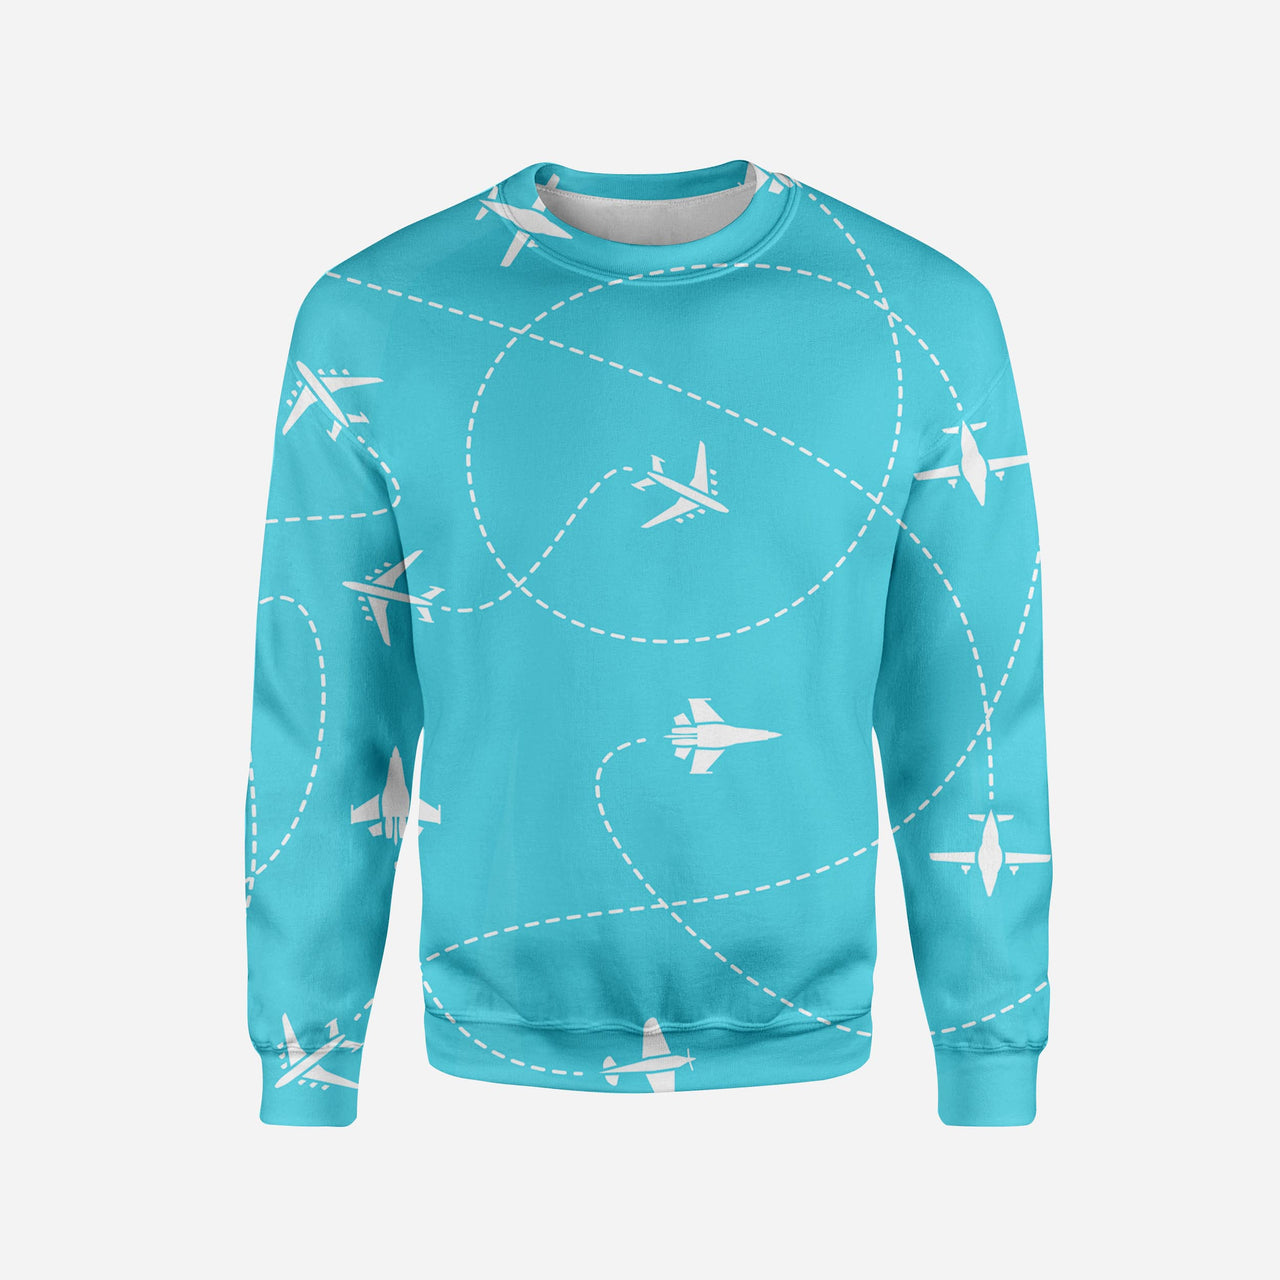 Travel The World By Plane Printed 3D Sweatshirts